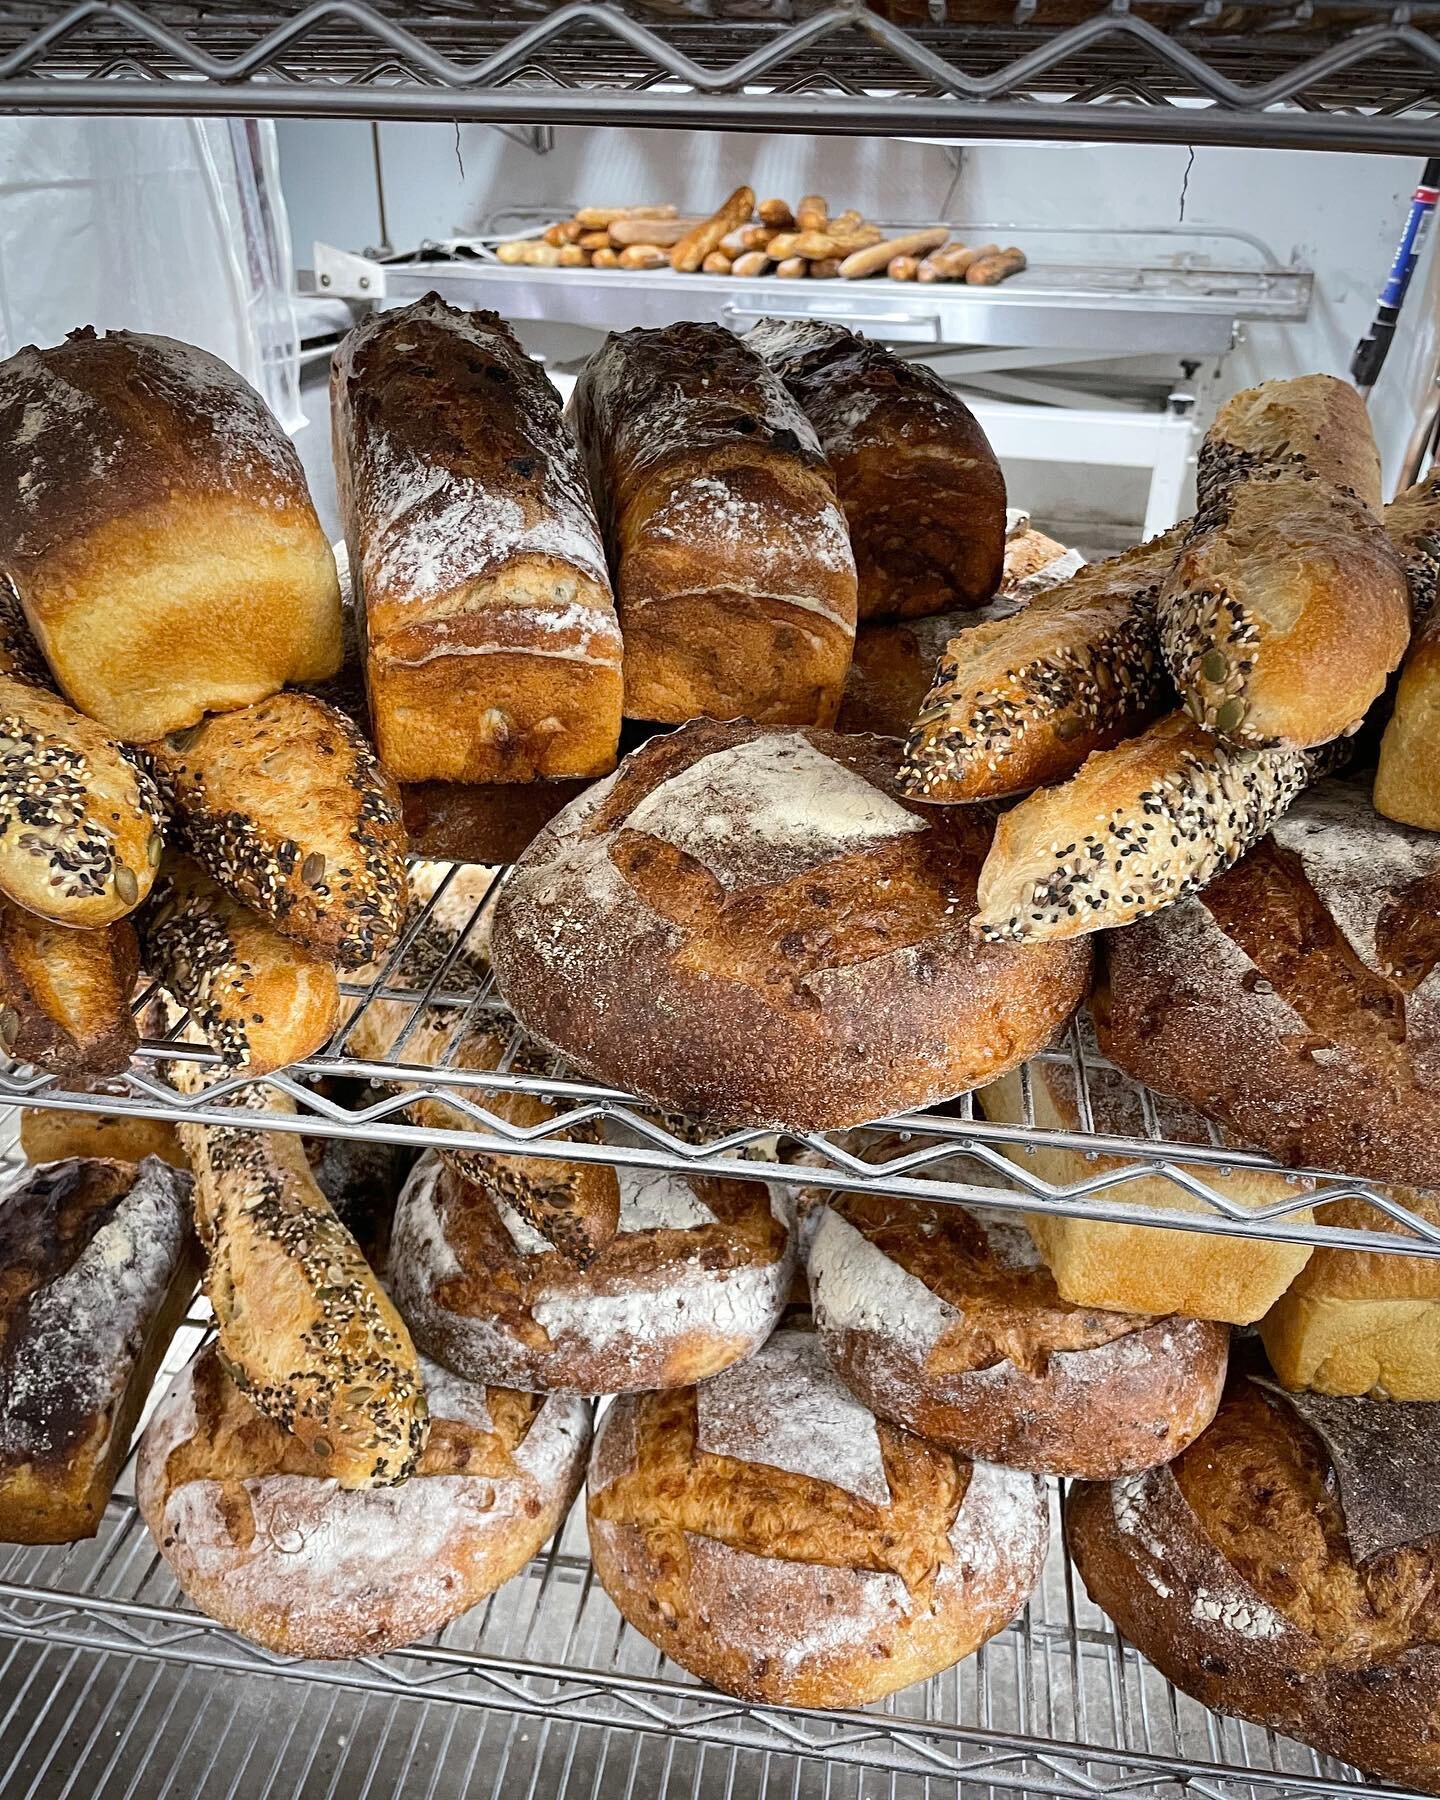 Mountains of bread! 
#breadbaking #baguettes